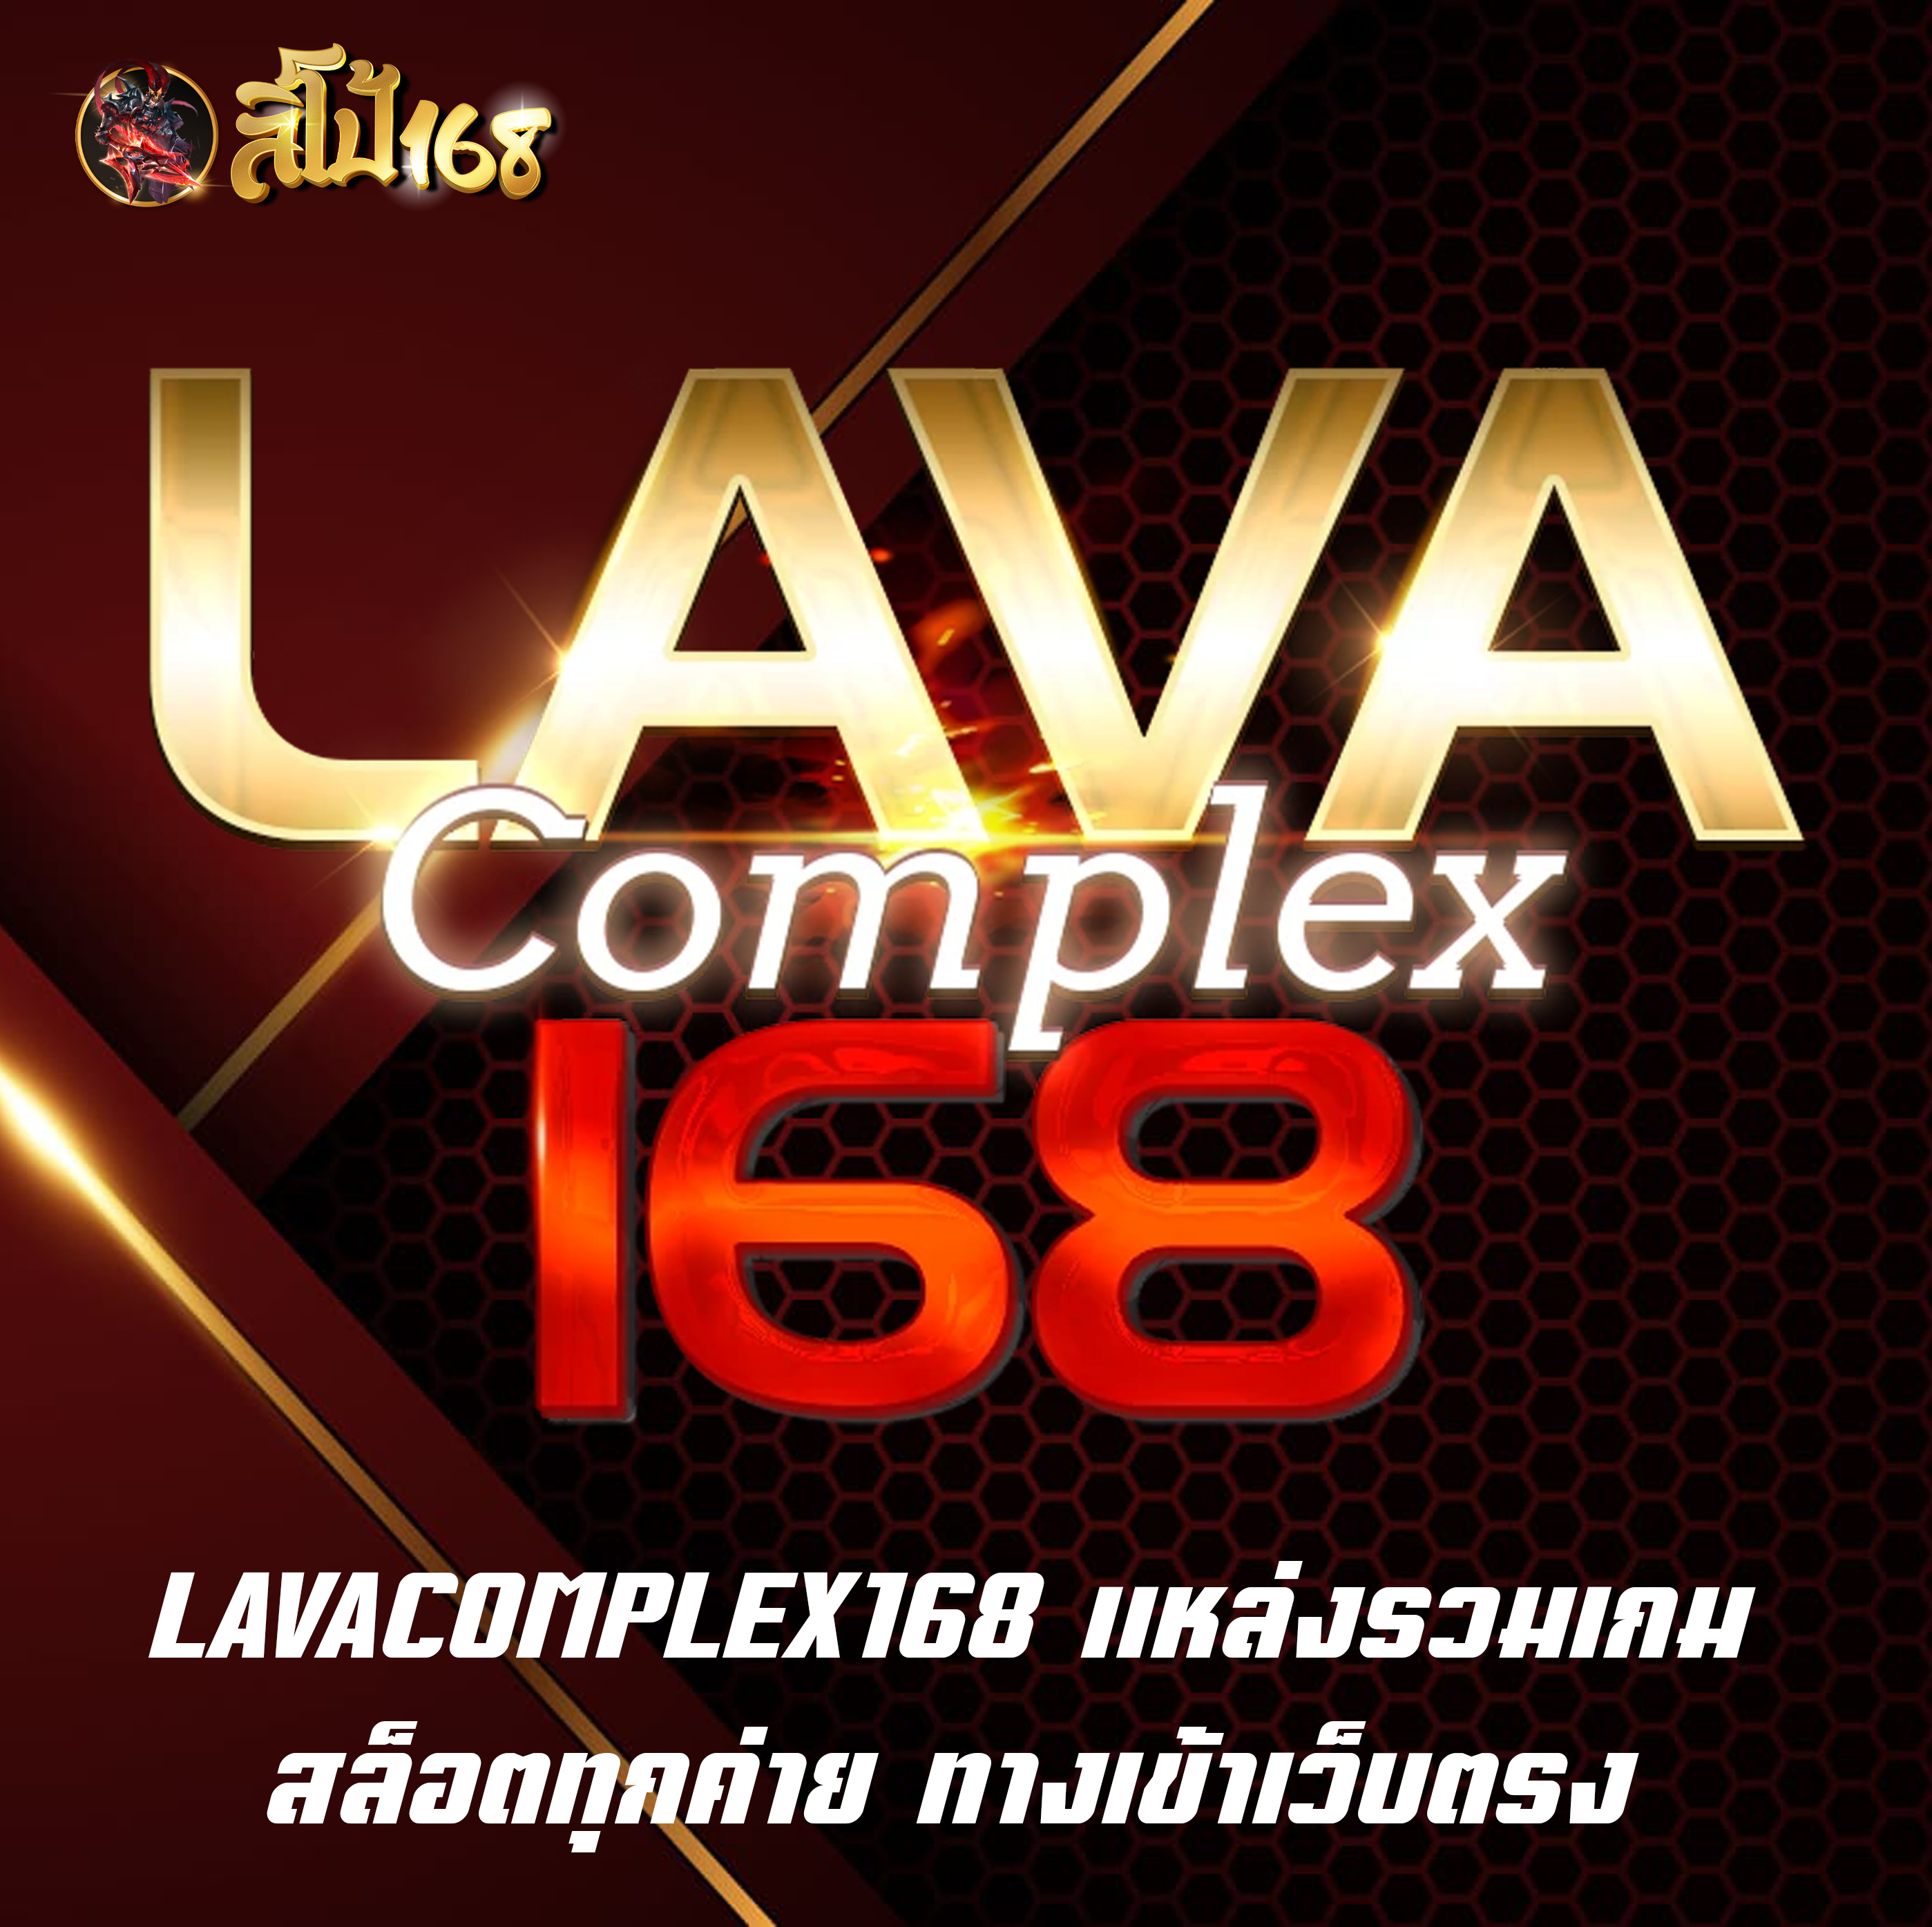 LAVACOMPLEX168